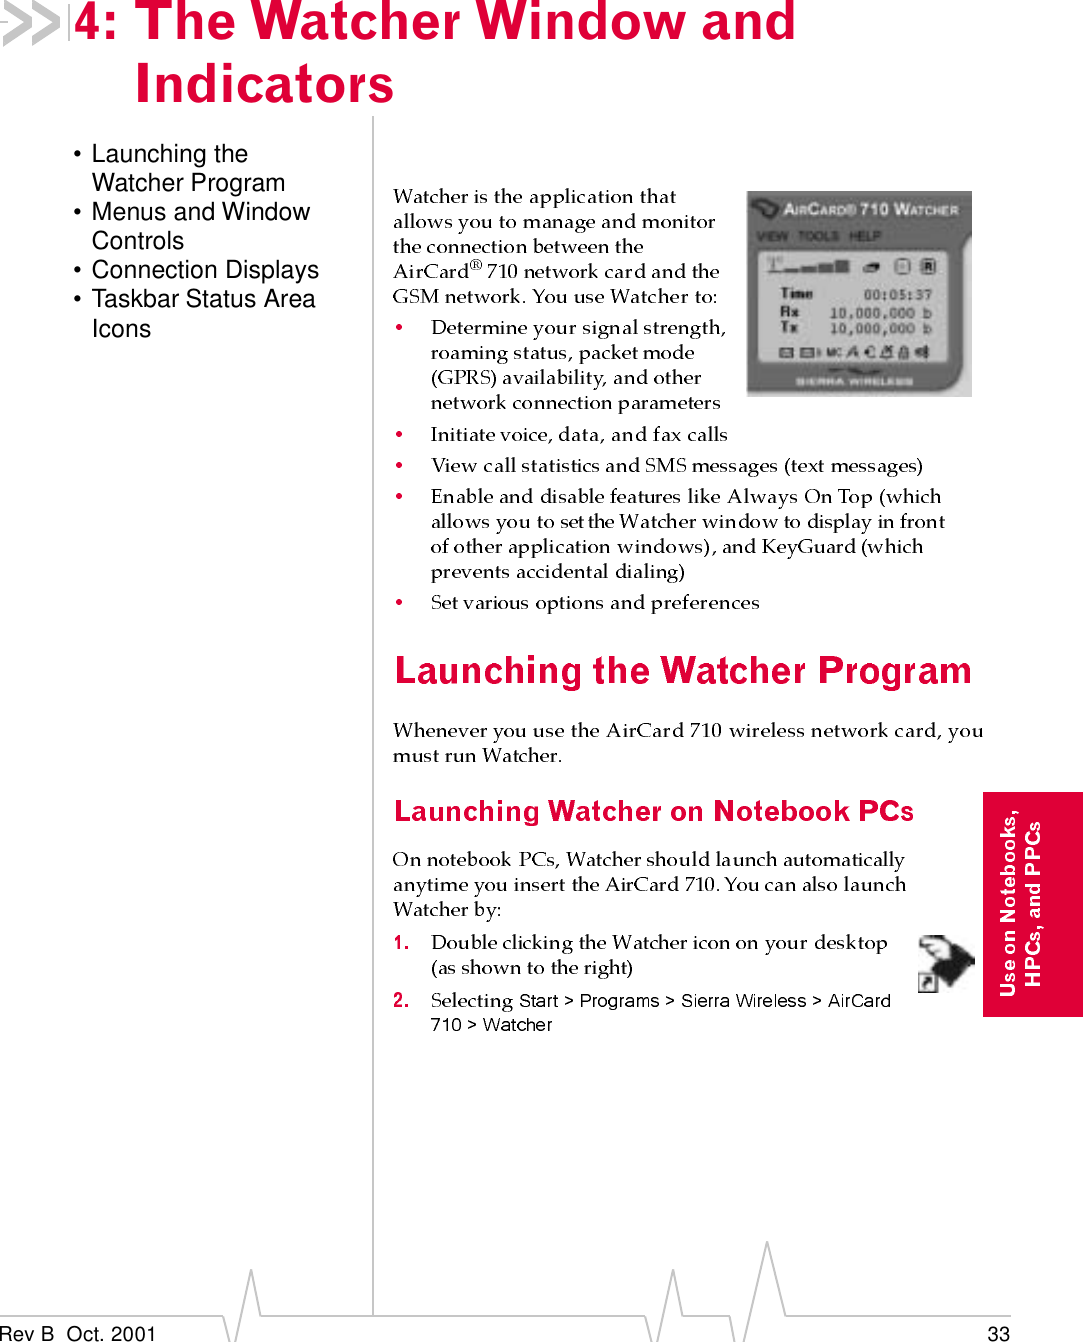 Rev B  Oct. 2001 334: The Watcher Window and Indicators• Launching the Watcher Program• Menus and Window Controls• Connection Displays• Taskbar Status Area Icons